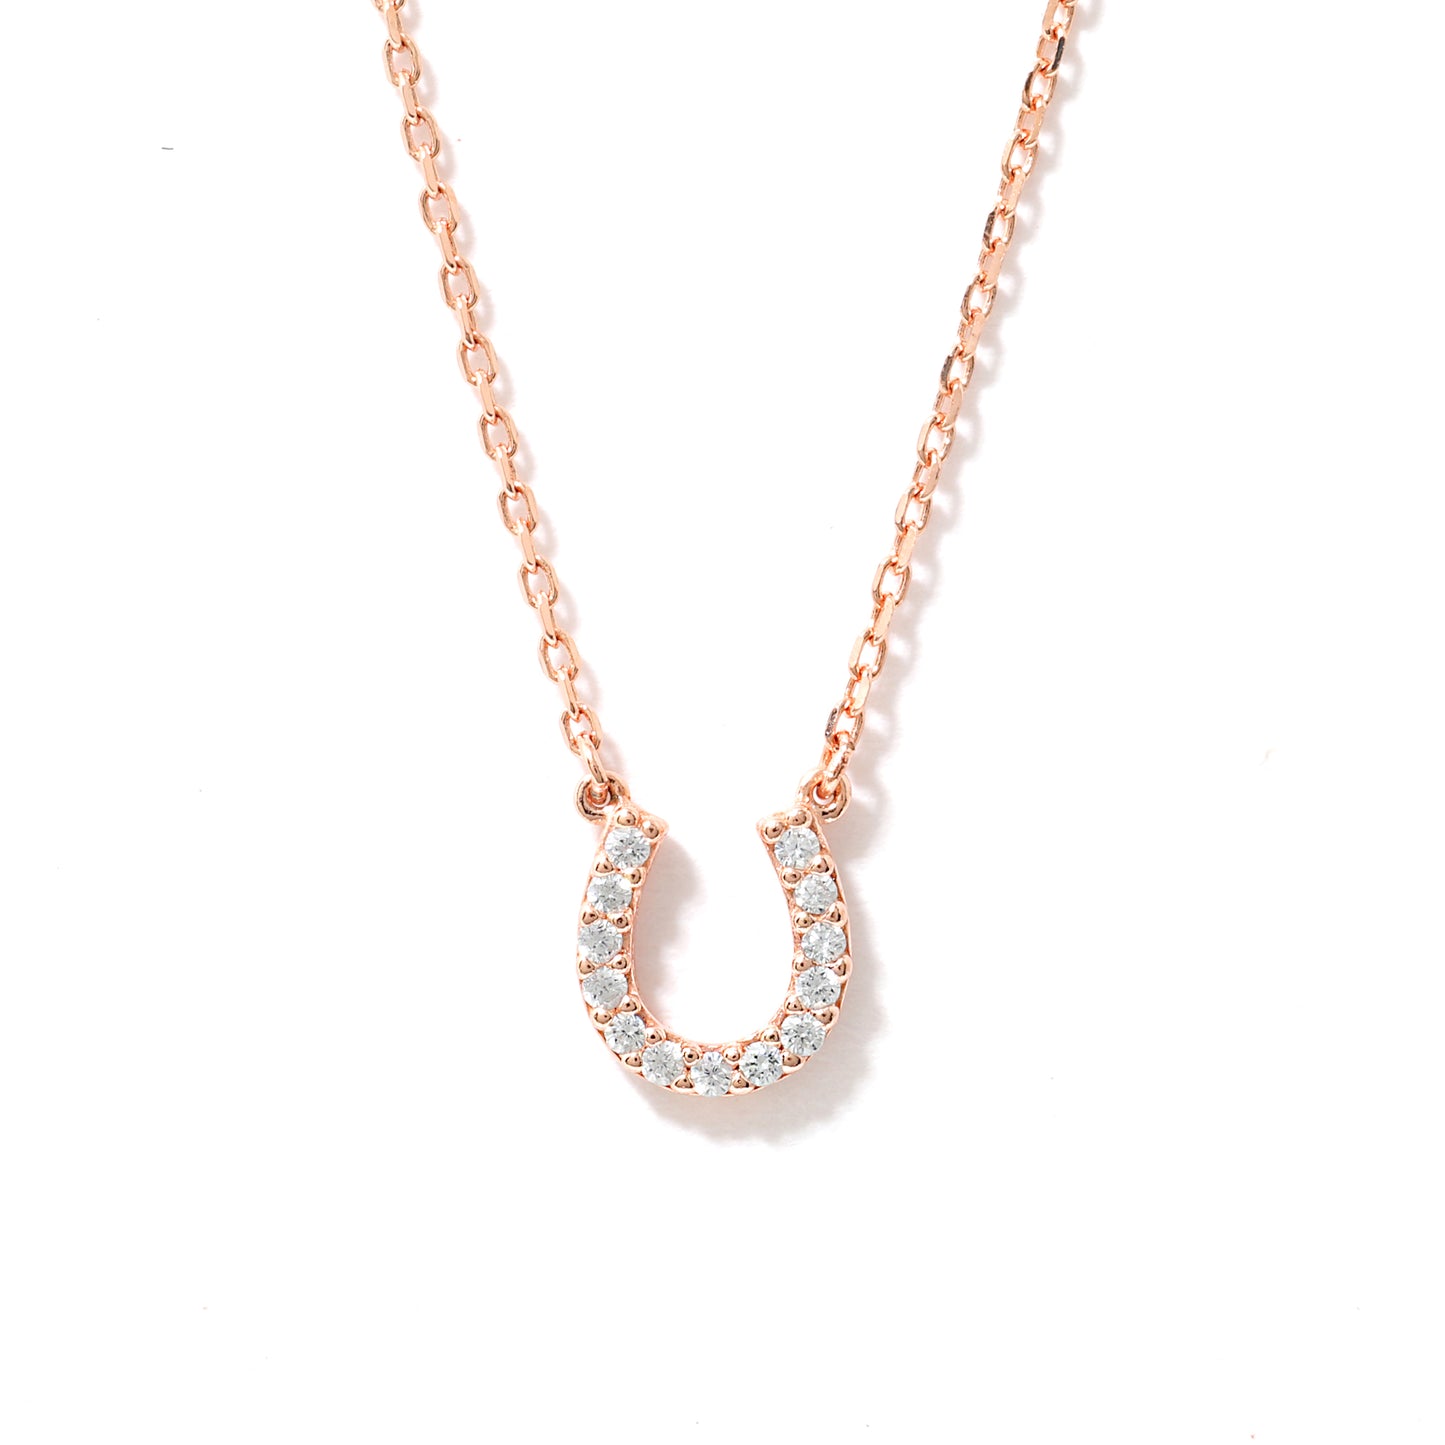 Mini Horseshoe Necklace in Rose Gold